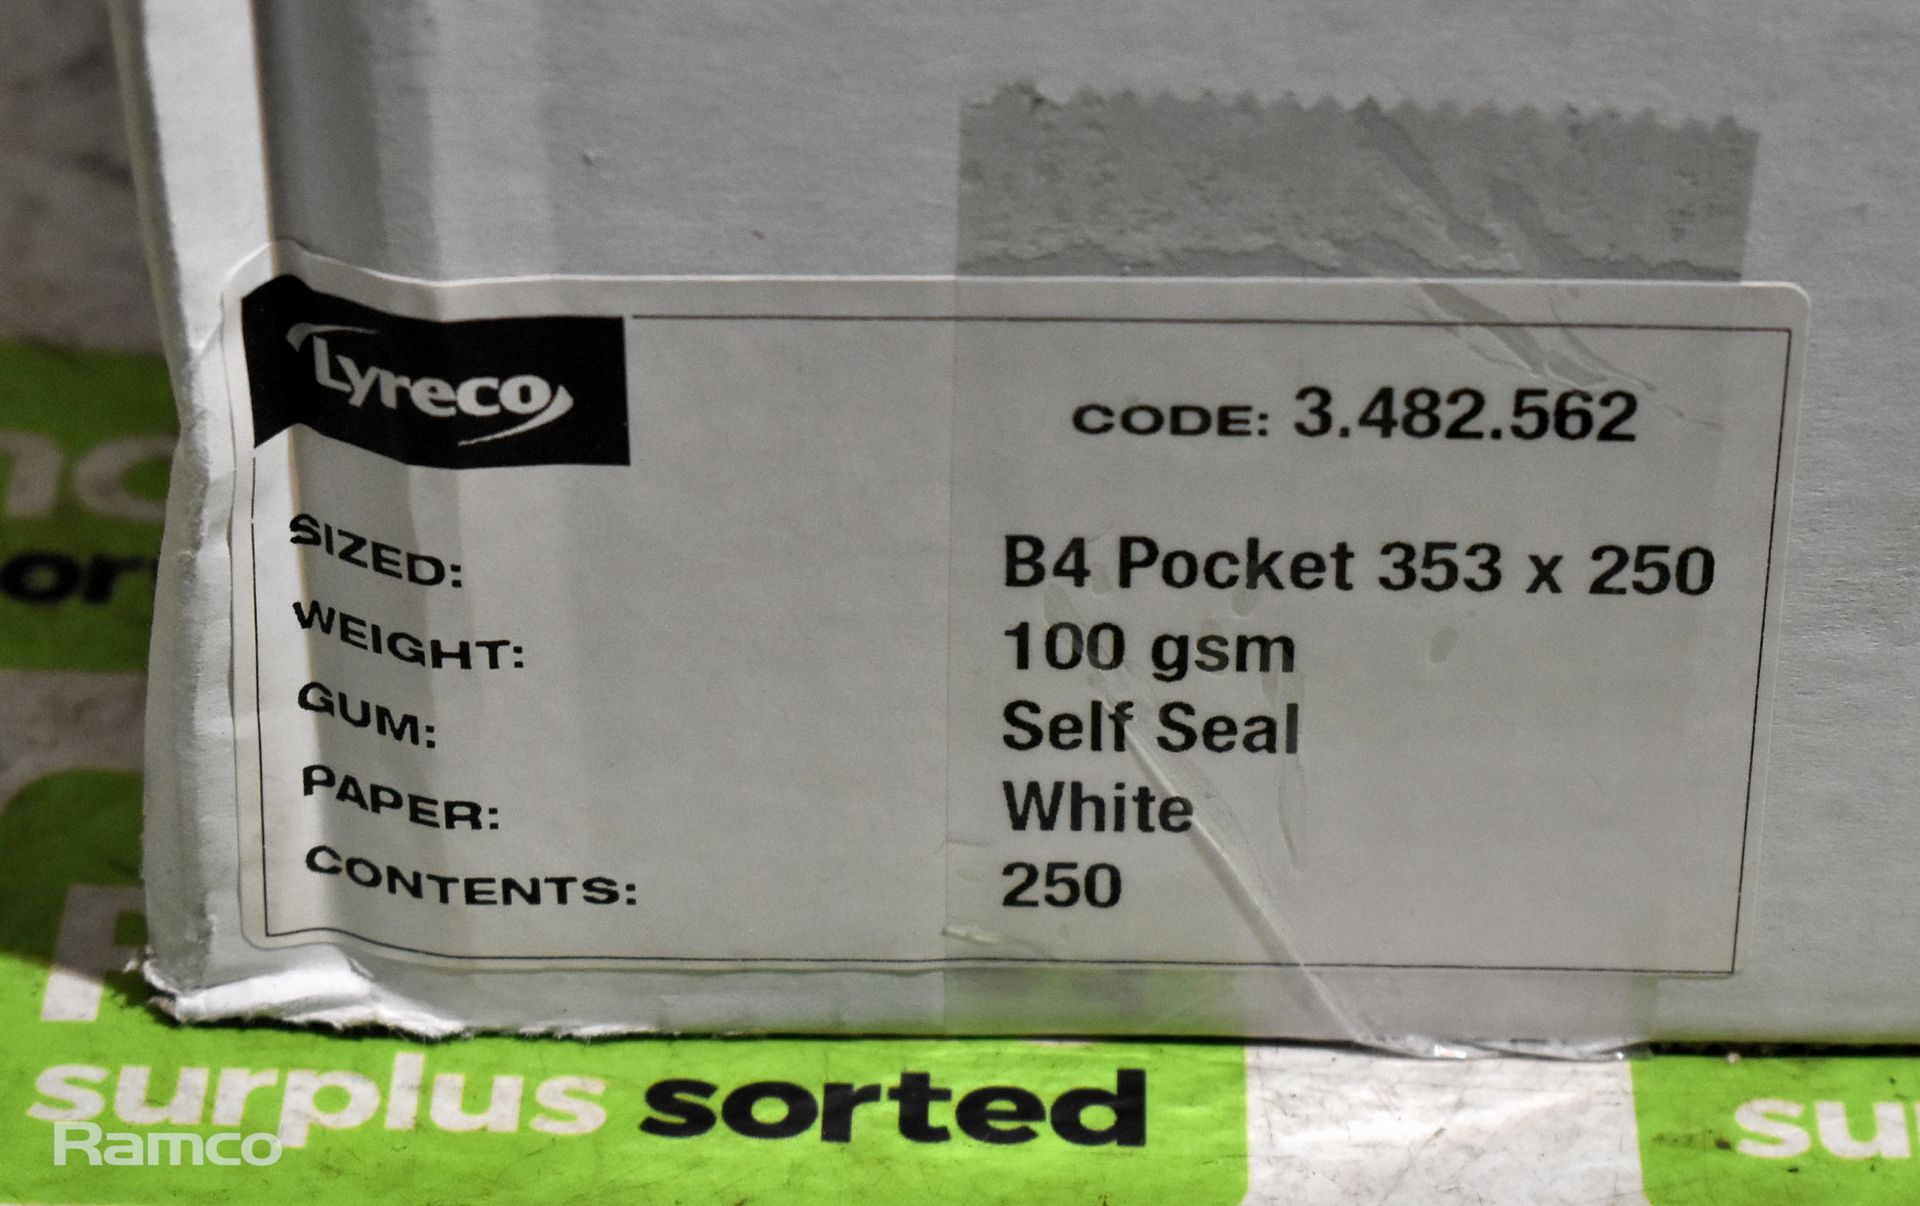 20x boxes of White Lyreco B4 pocket envelopes - 353 x 250mm 100 gsm - 250 envelopes per box - Image 5 of 5